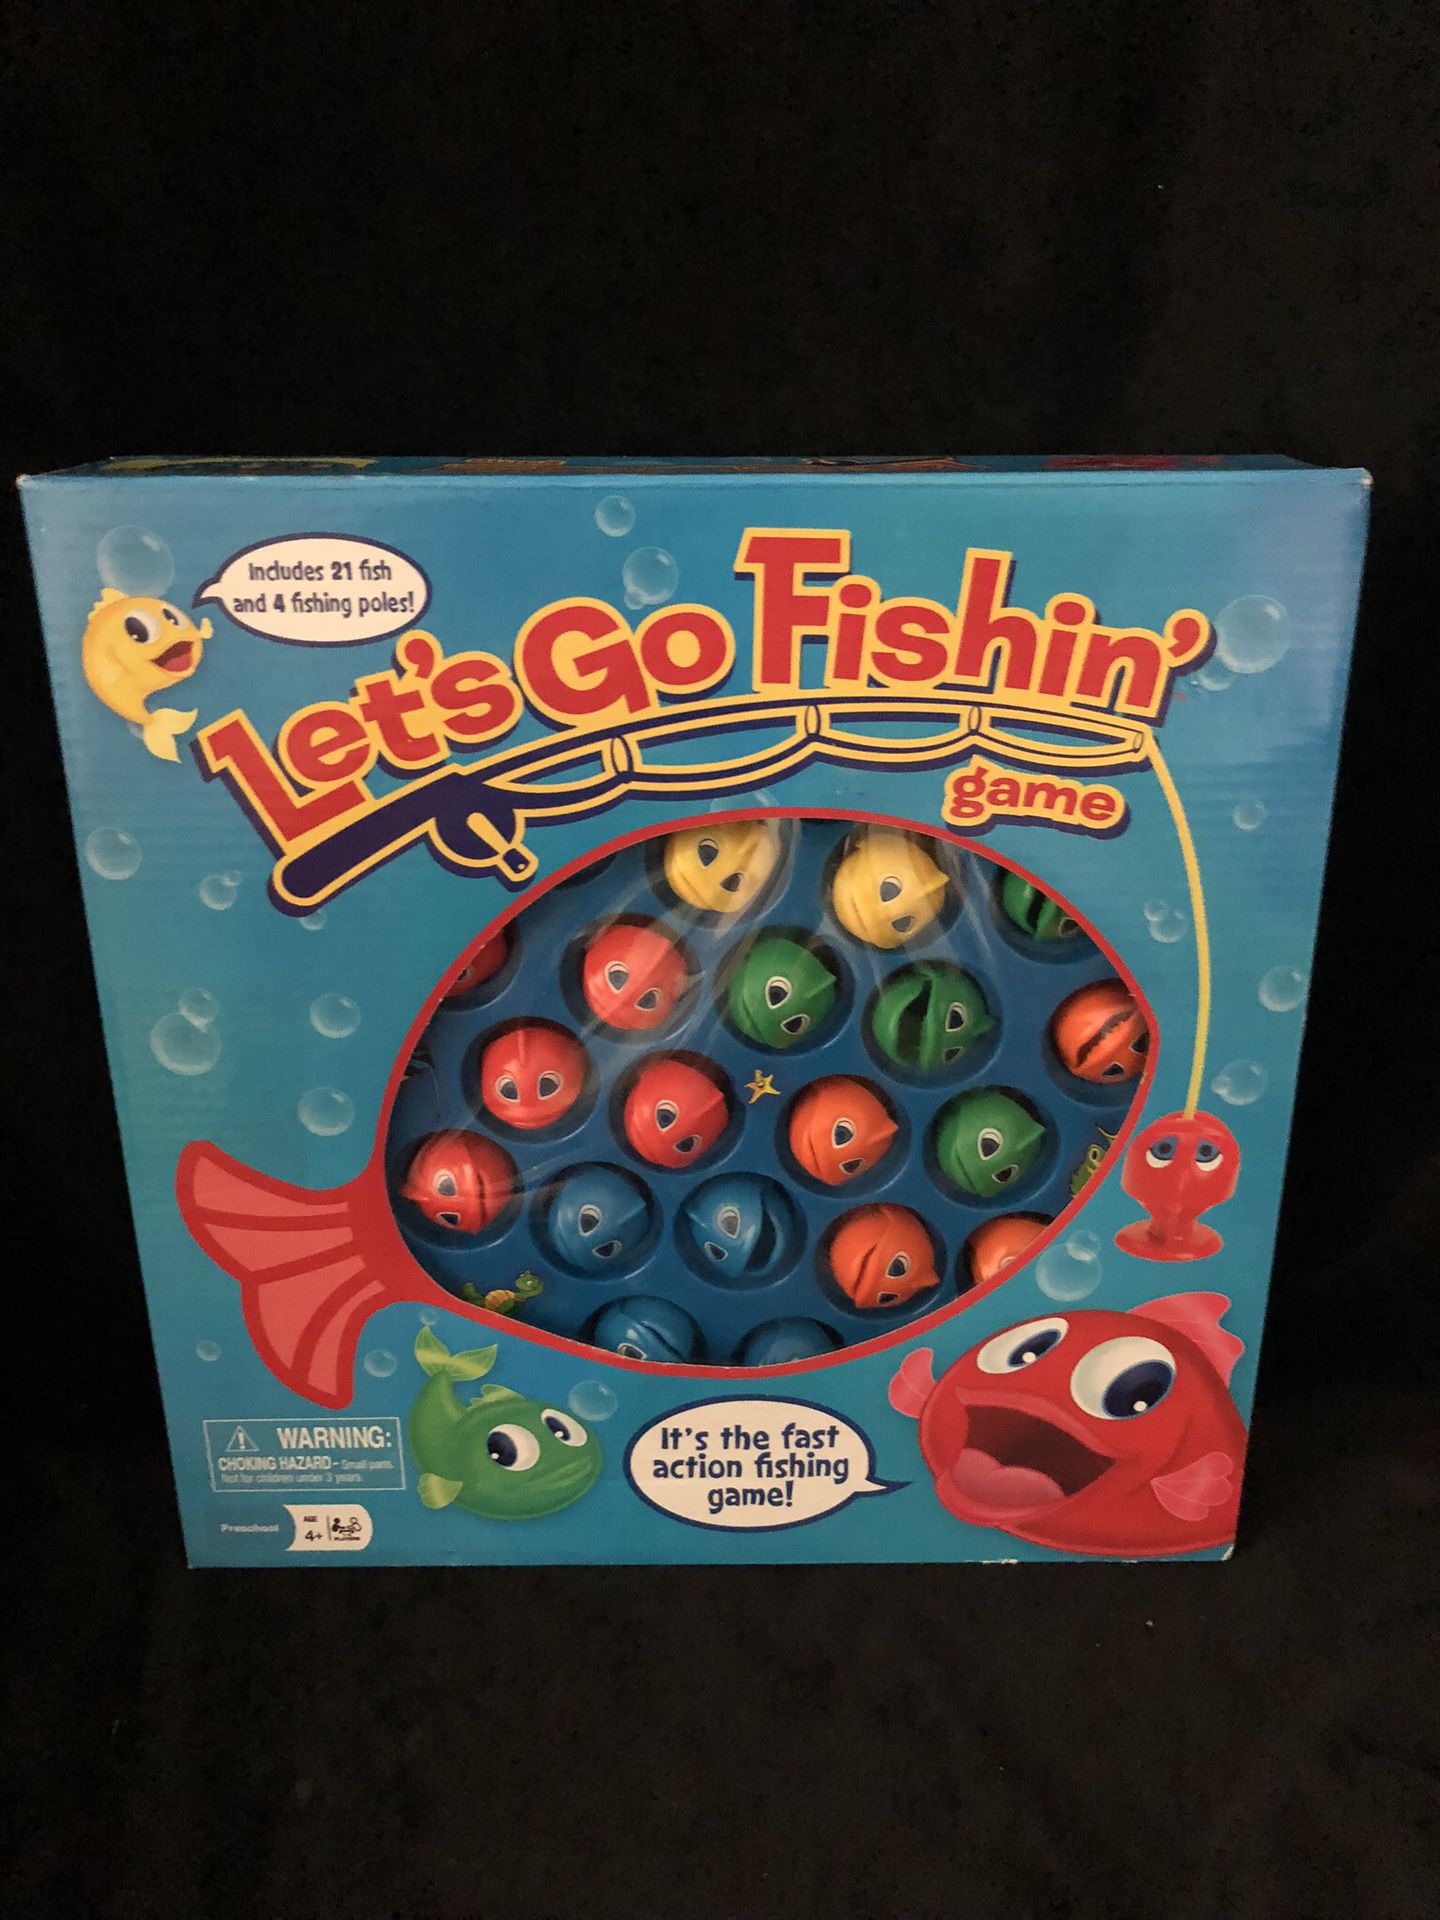 Let’s Go Fishin Game